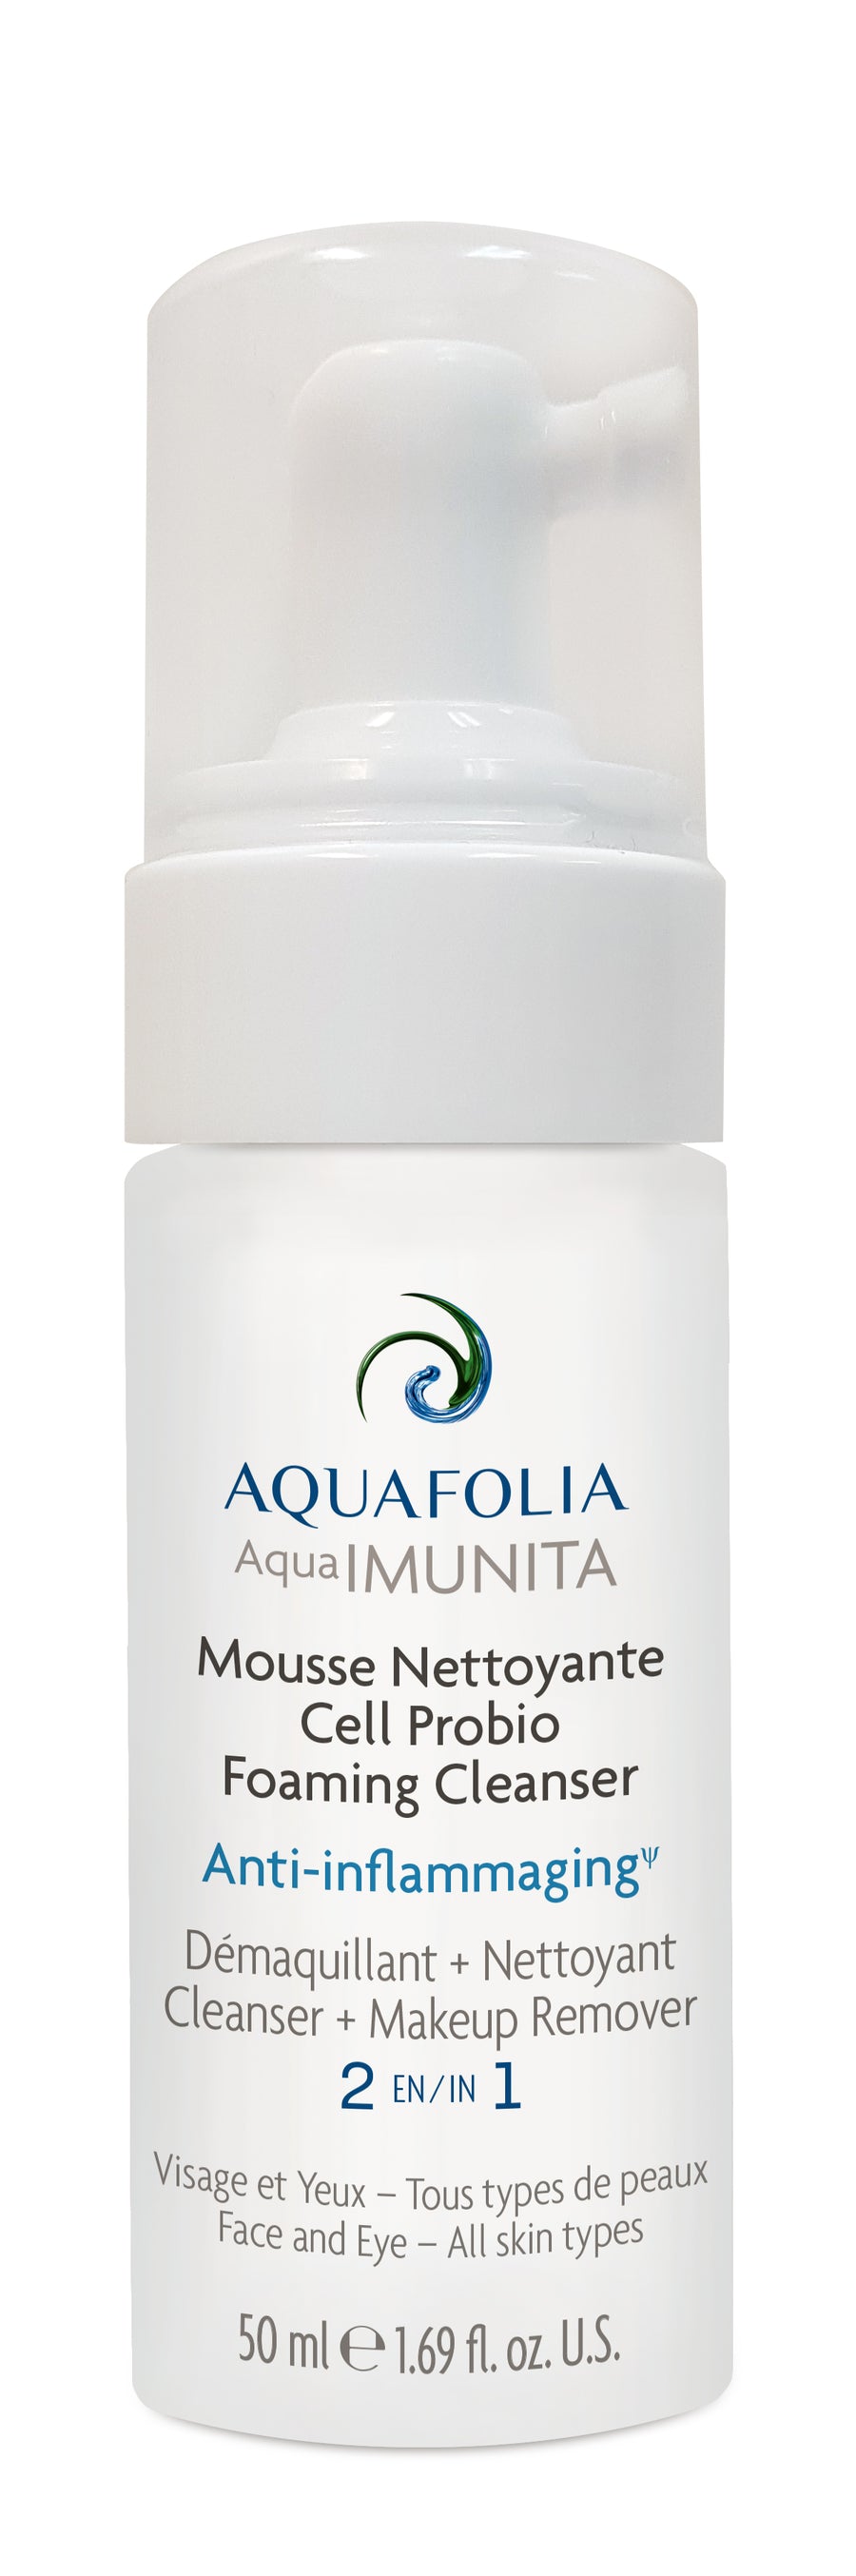 Aquafolia- Mousse Nettoyante Cell Probio- AquaIMUNITA